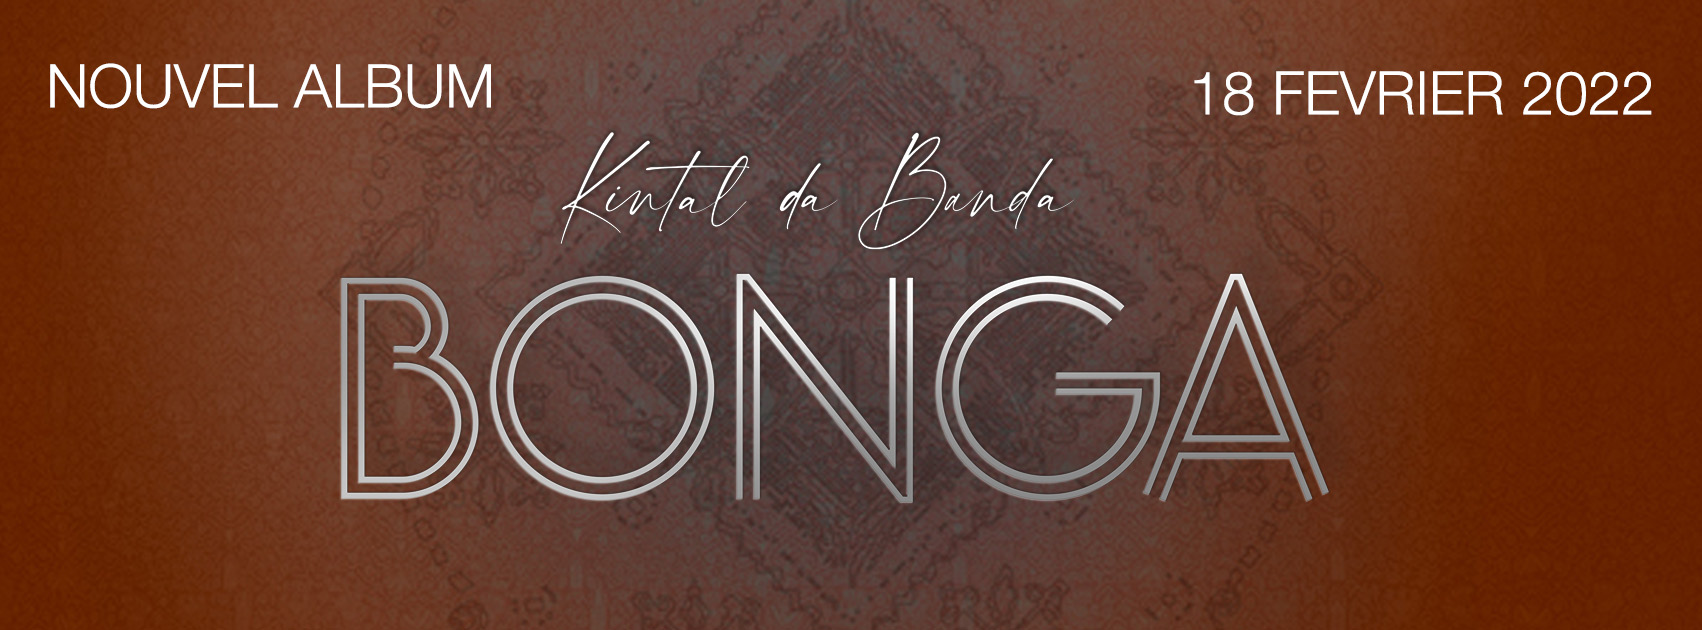 BONGA – Bandeau FB ALBUM